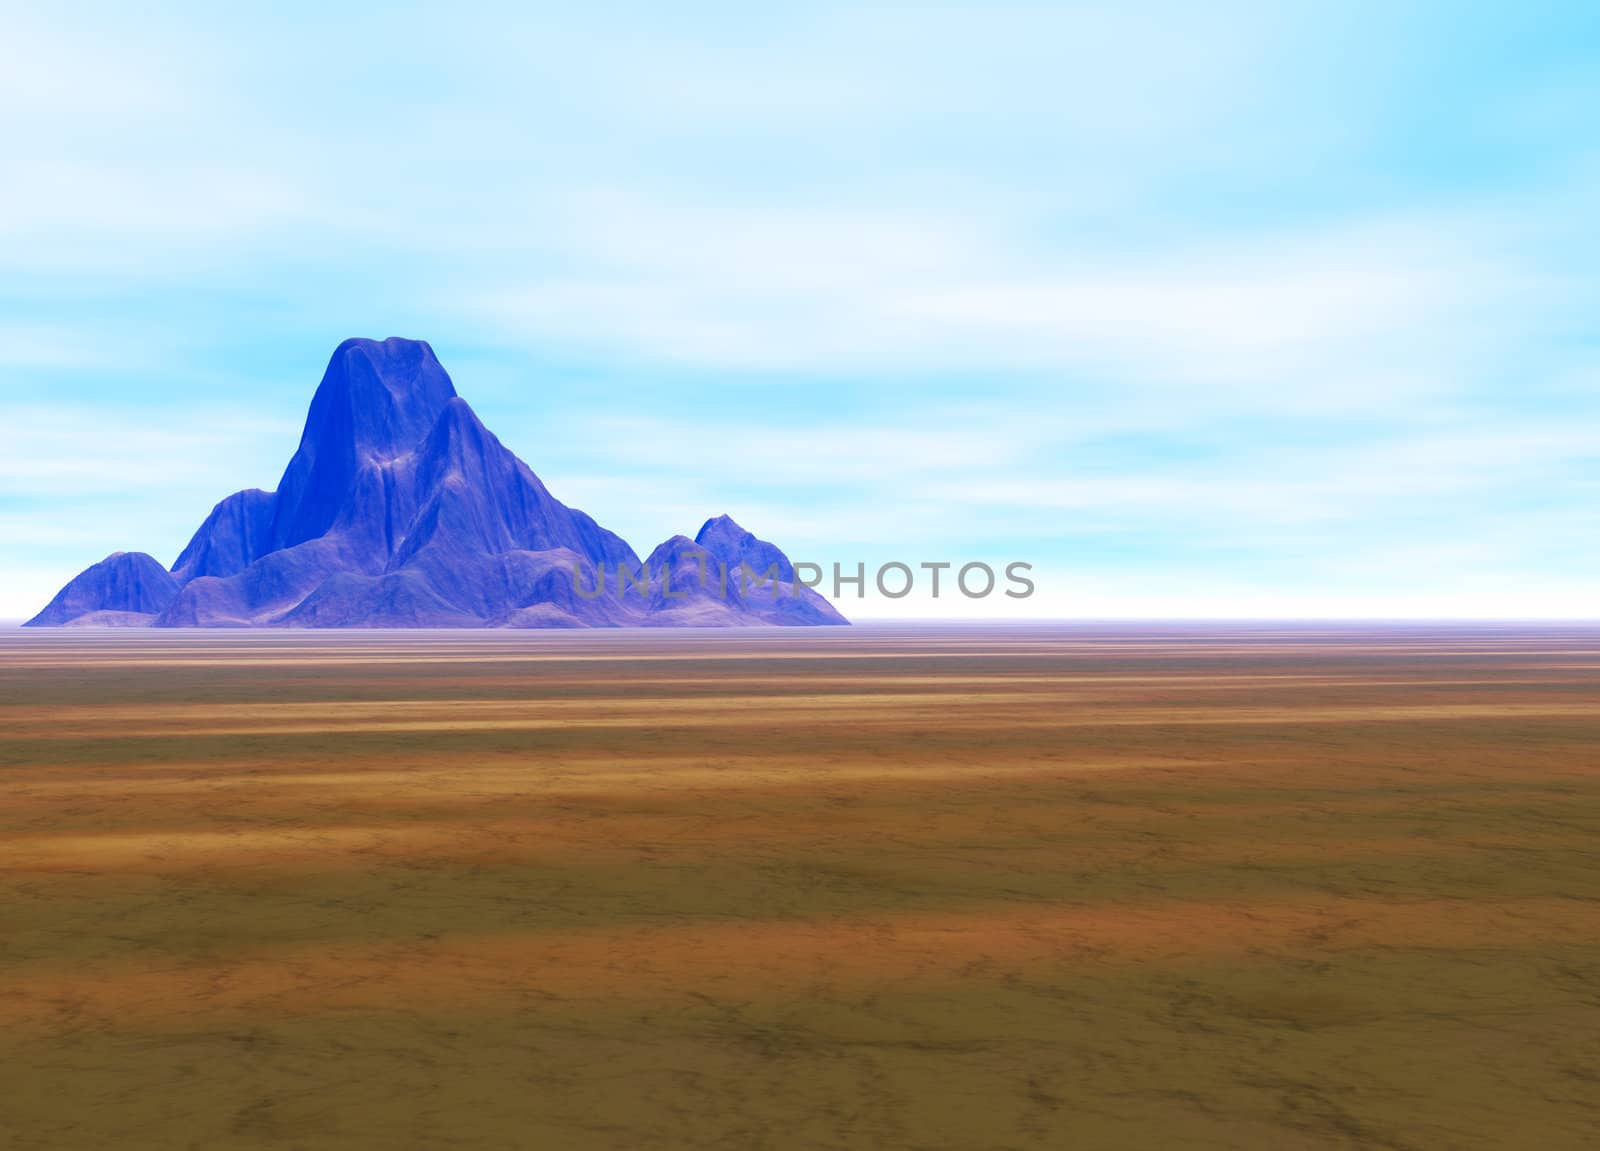 Distant Mountain on Horizon Landscape by bobbigmac